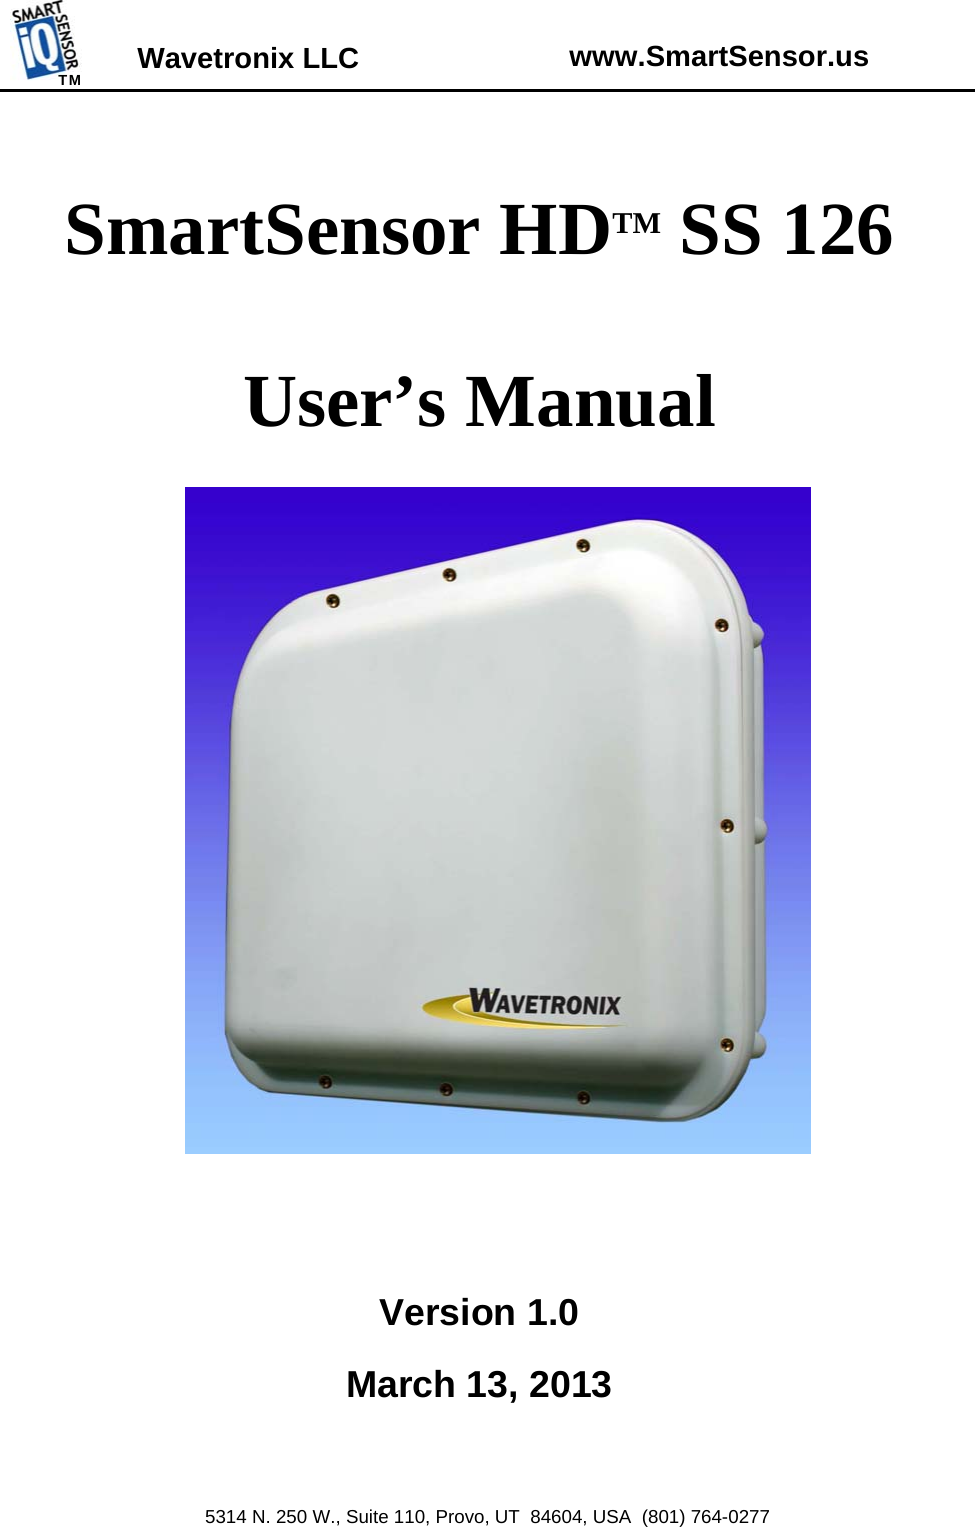   Wavetronix LLC  www.SmartSensor.us TM 5314 N. 250 W., Suite 110, Provo, UT  84604, USA  (801) 764-0277  SmartSensor HDTM SS 126  User’s Manual                              Version 1.0  March 13, 2013  